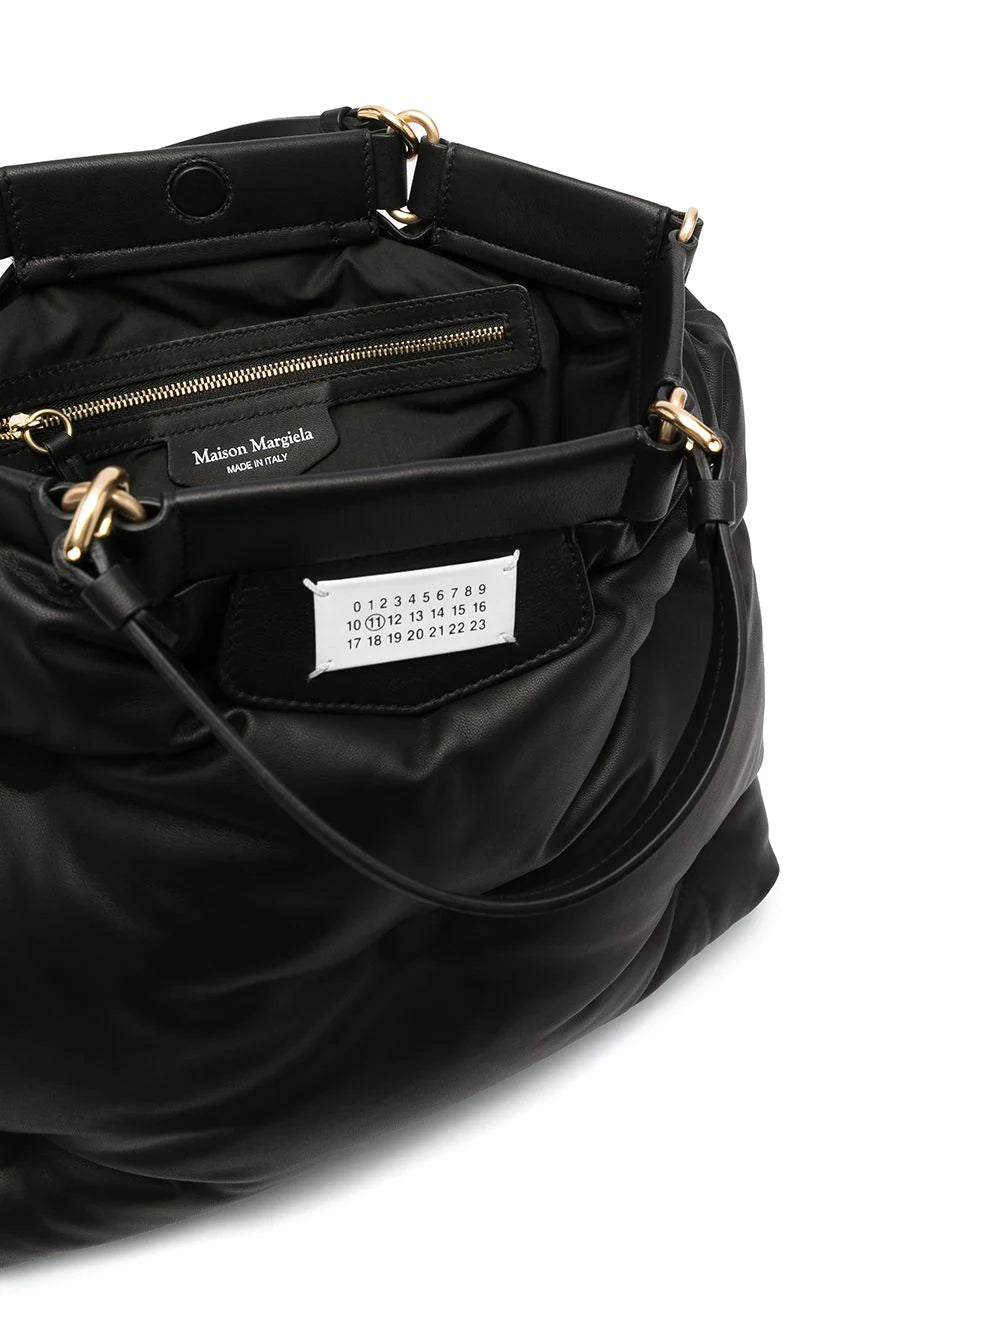 Maison Margiela launches a new shape of the Glam Slam bag, the